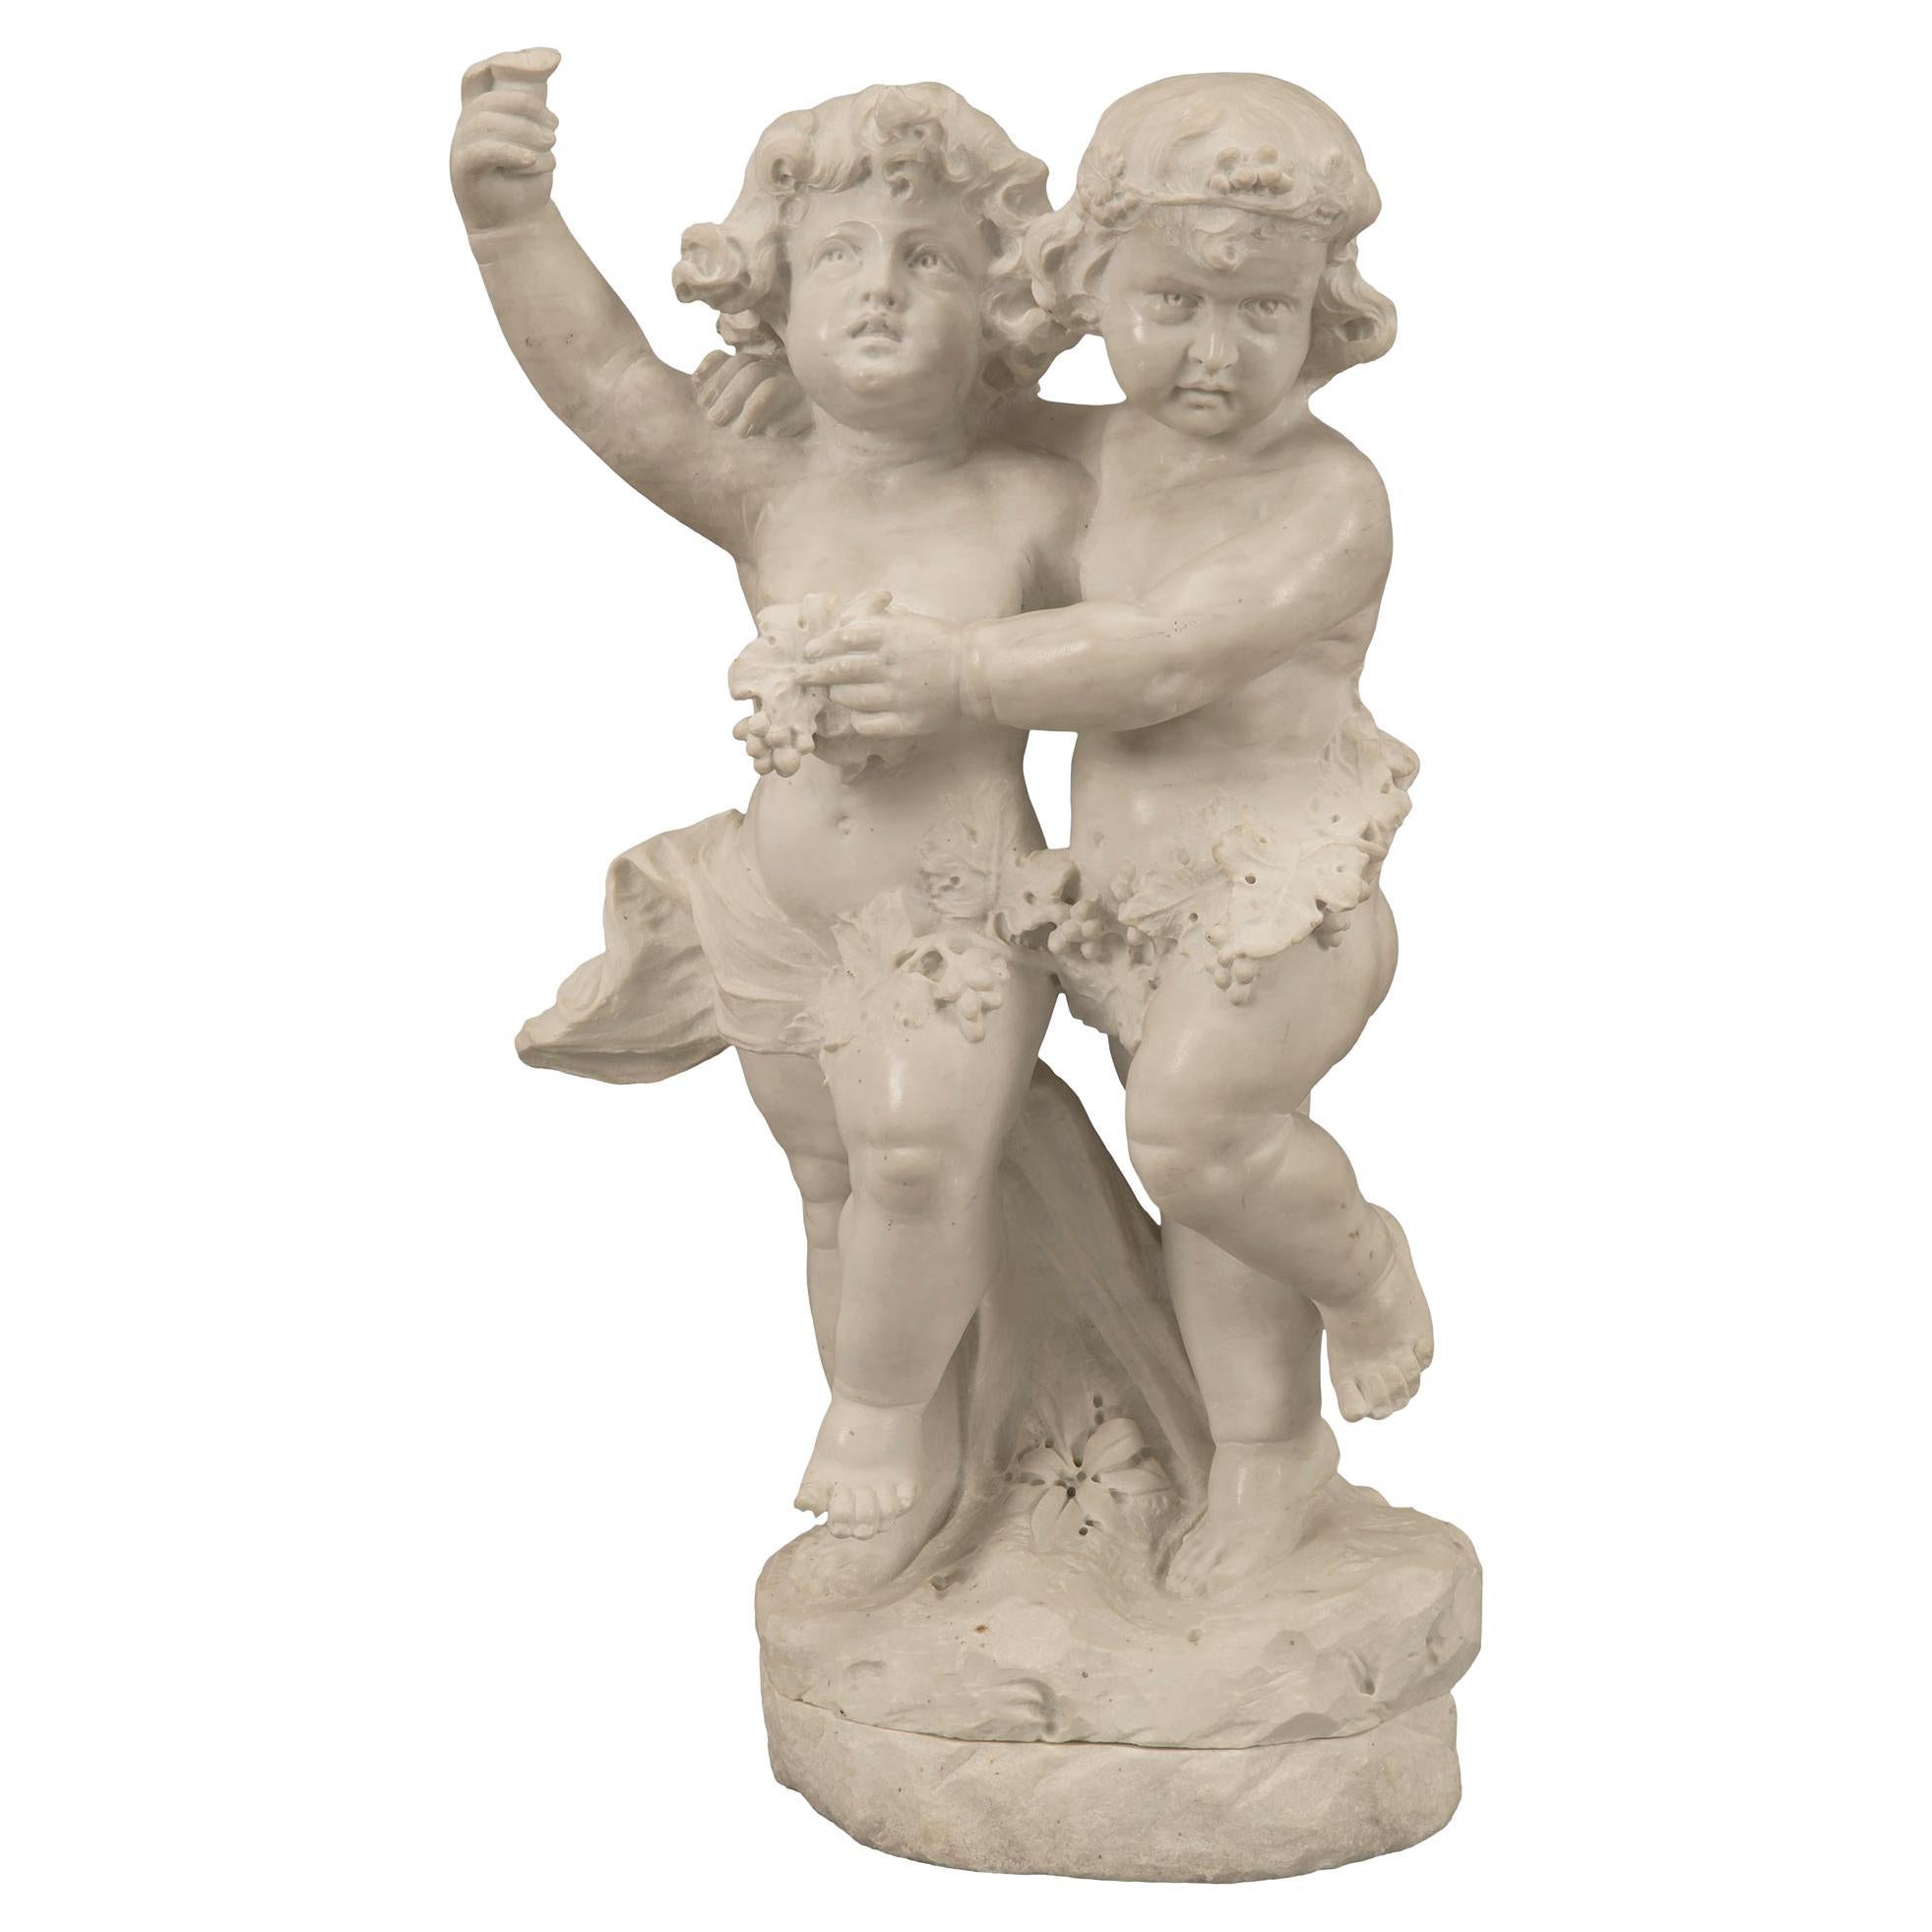 Italian 19th Century White Carrara Marble Statue of Two Children Playing